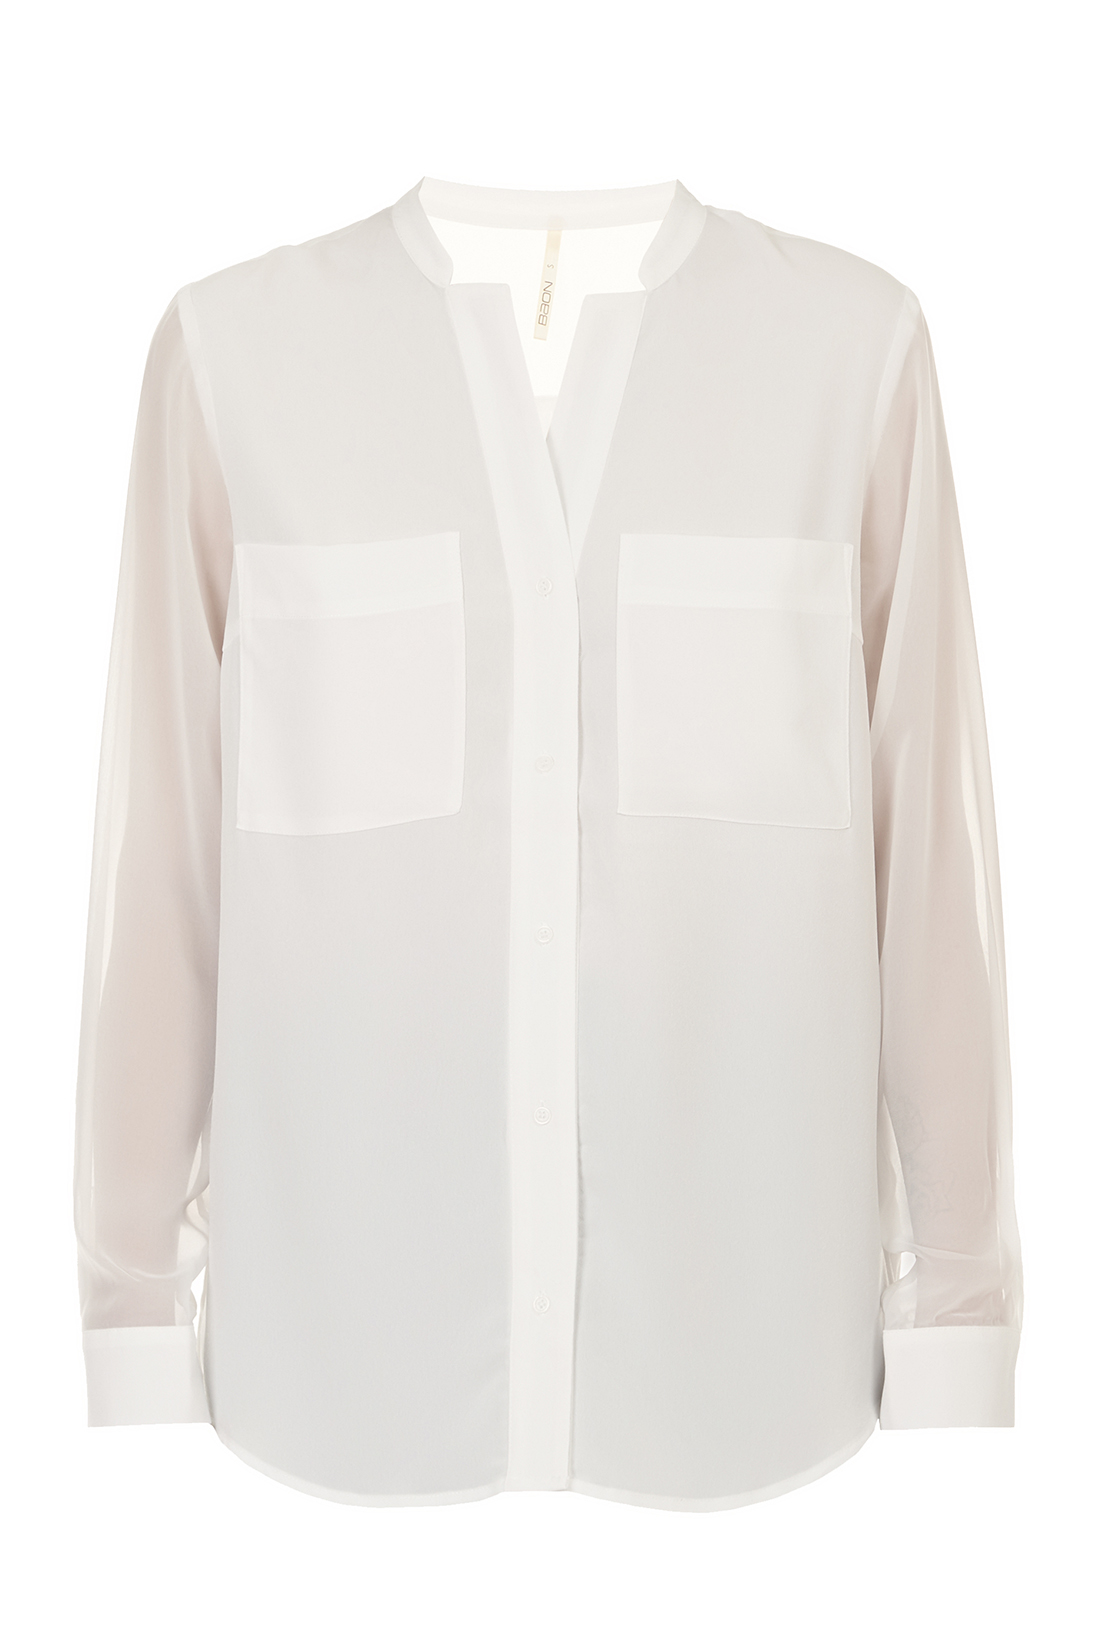 Блузка с накладными карманами (арт. baon B177544), размер M, цвет белый Блузка с накладными карманами (арт. baon B177544) - фото 3